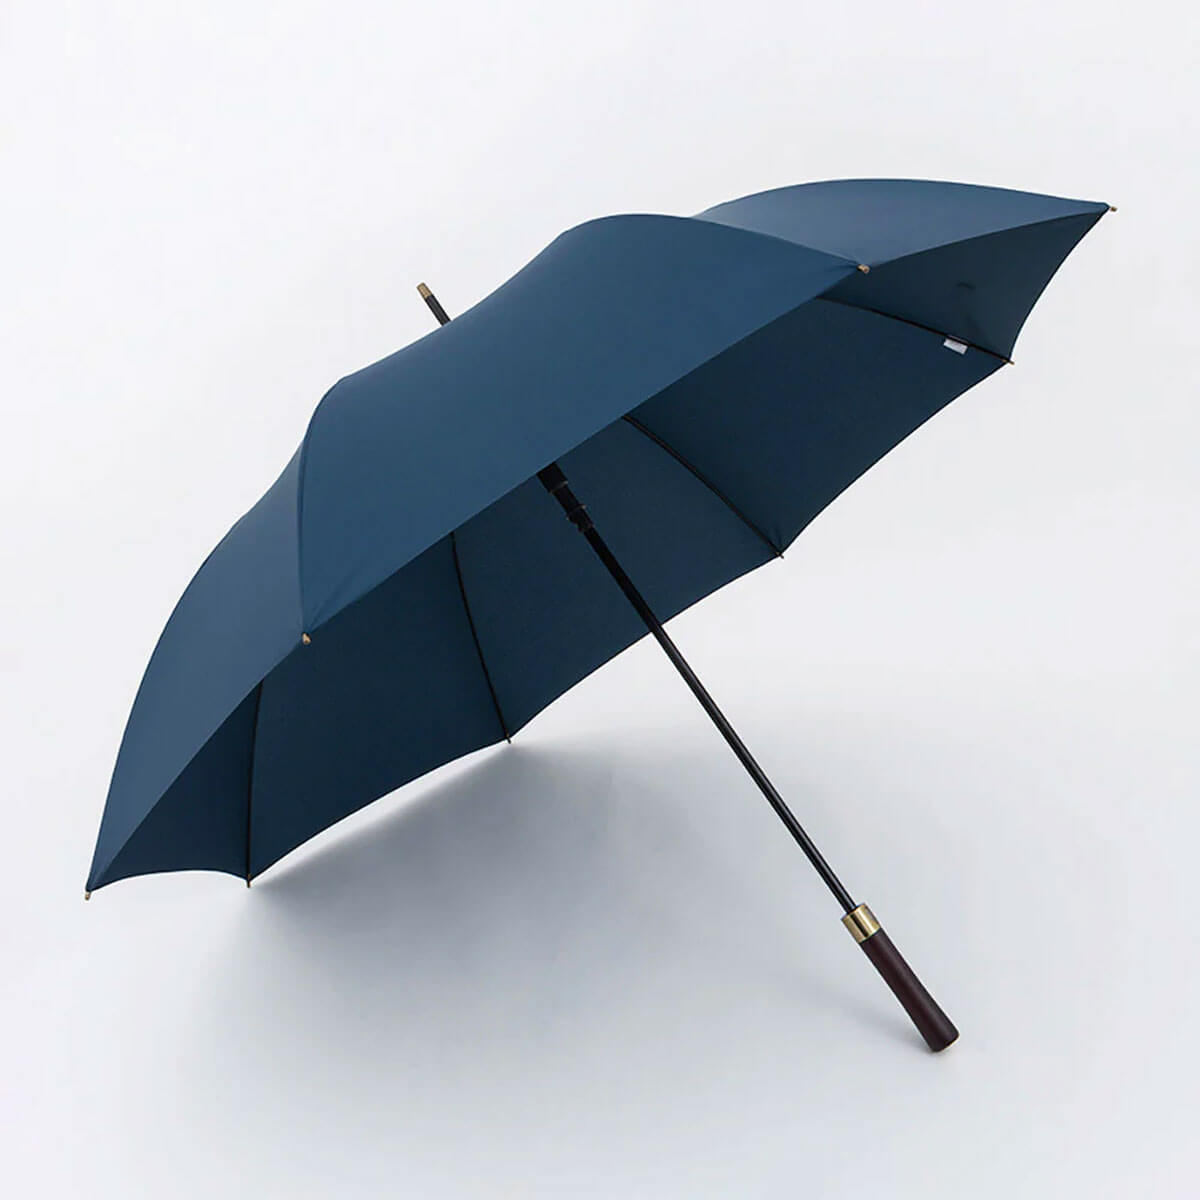 Vintage-inspired parasol sheltering from rain.